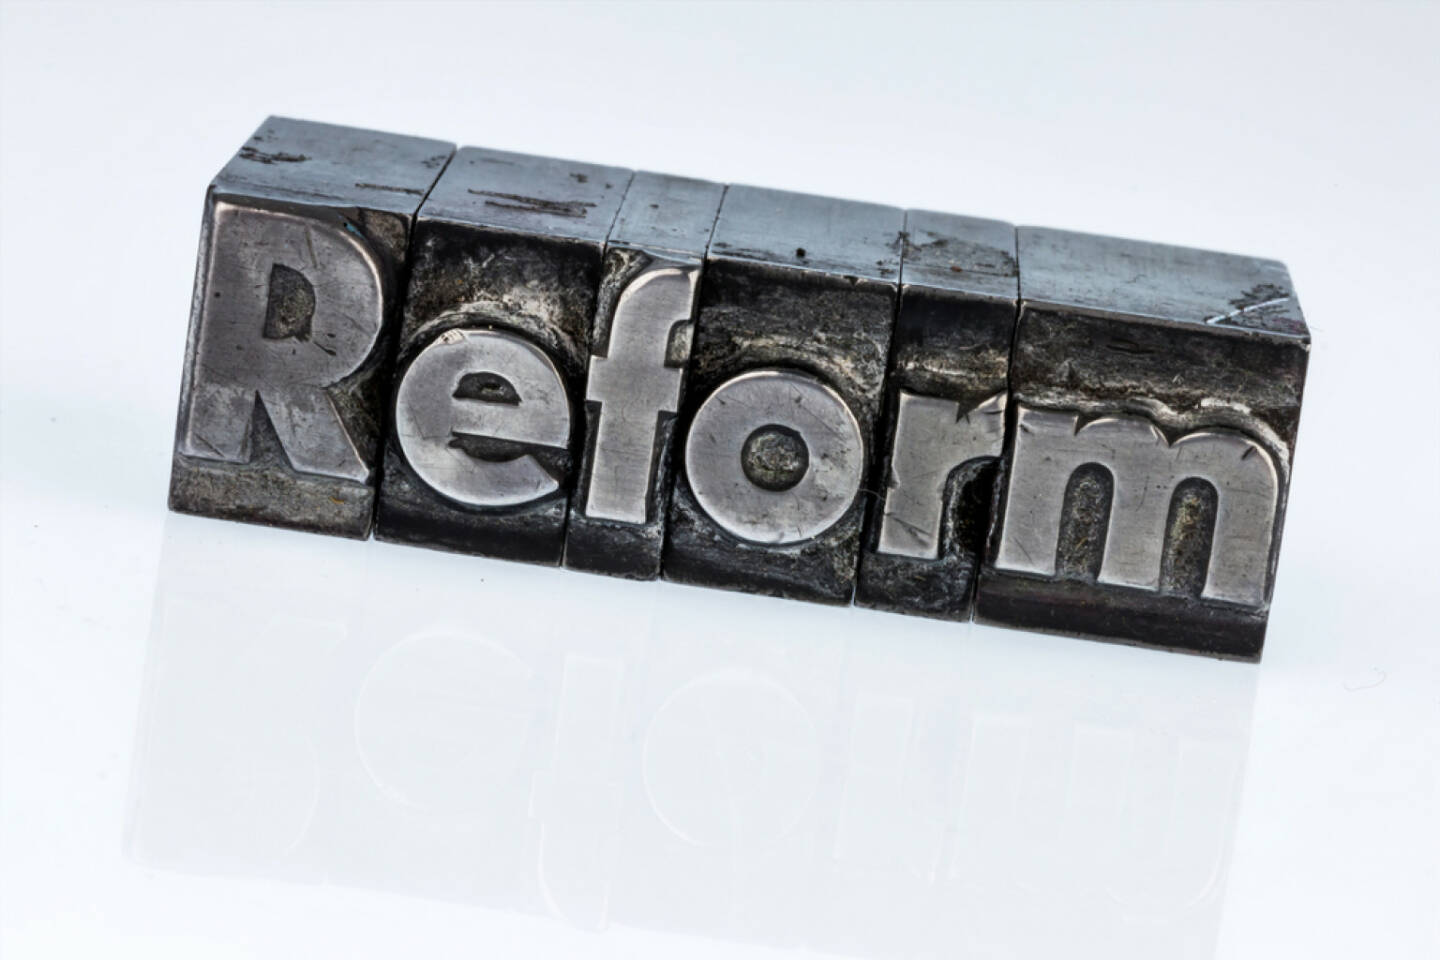 Reform, Steuererform, Steuer, Steuern, Ausgaben, Abgaben, http://www.shutterstock.com/de/pic-252796471/stock-photo-the-word-reform-in-lead-letters-written-photo-icon-for-quick-correspondence.html?